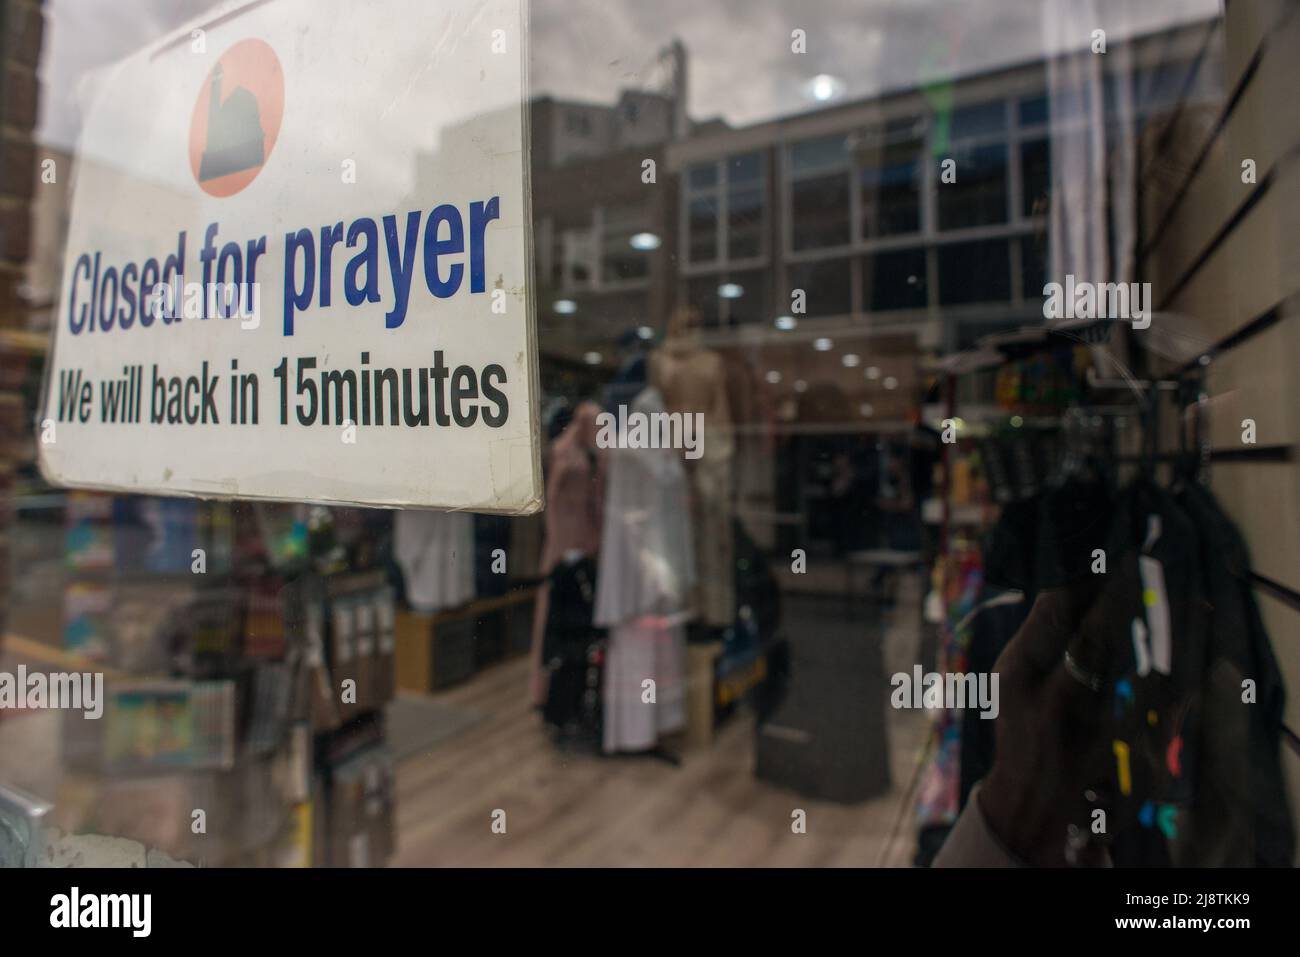 London, 18/08/2017: Negozio islamico chiuso per preghiera - islamischer Laden wegen Gebet geschlossen, Whitechapel. © Andrea Sabbadini Stockfoto